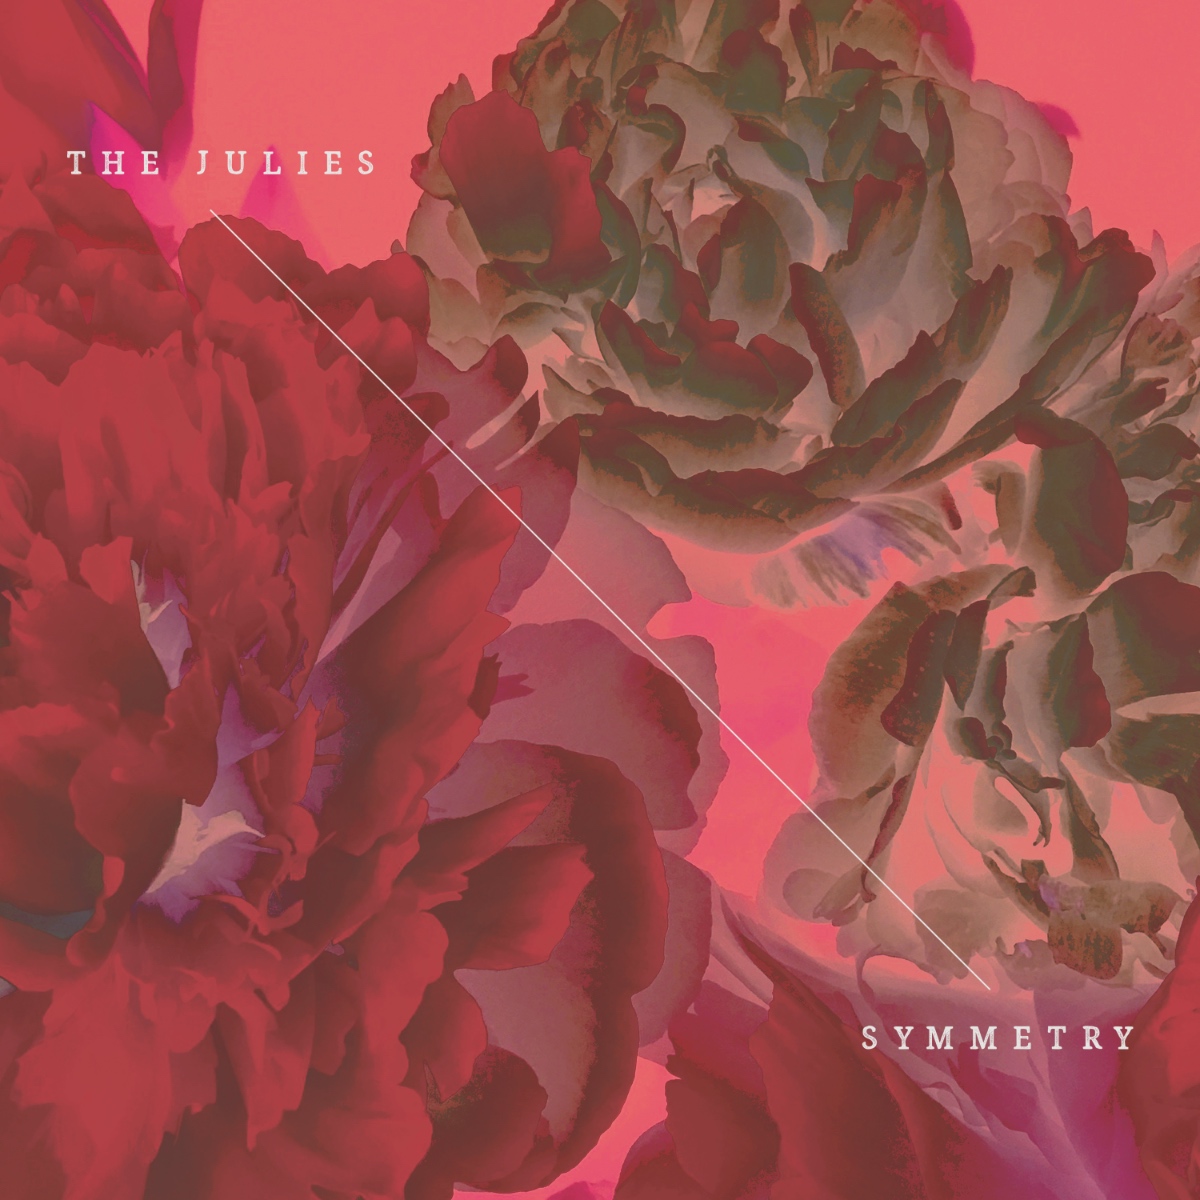 The Julies premiere new single “Symmetry”